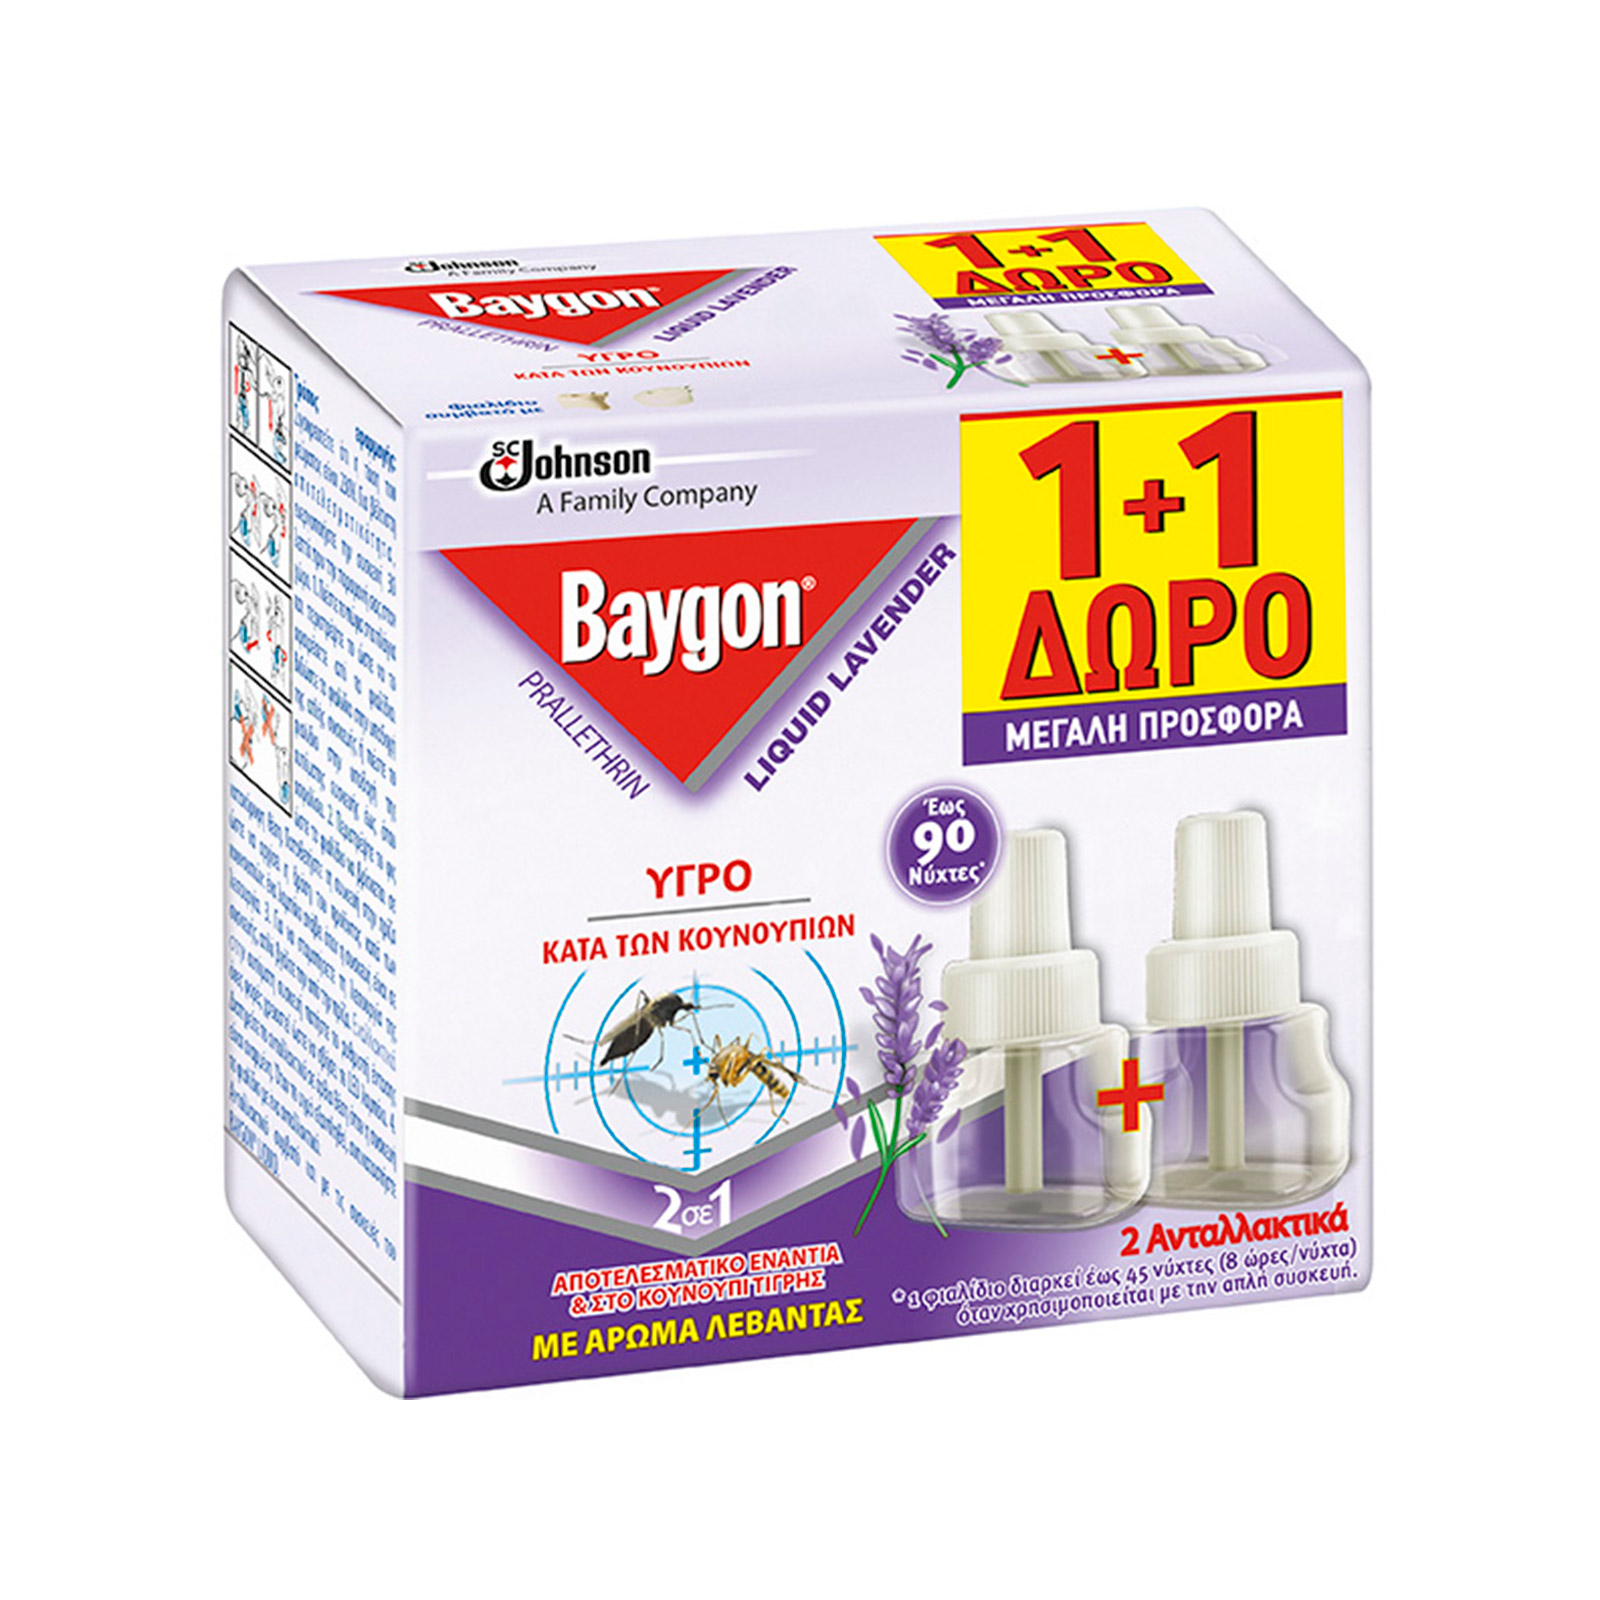 Baygon υγρό ανταλλακτικό εντομοαπωθητικό liquid άρωμα λεβάντας 90 νύχτες  (27ml) (1+1) - ΘΑΝΟΠΟΥΛΟΣ